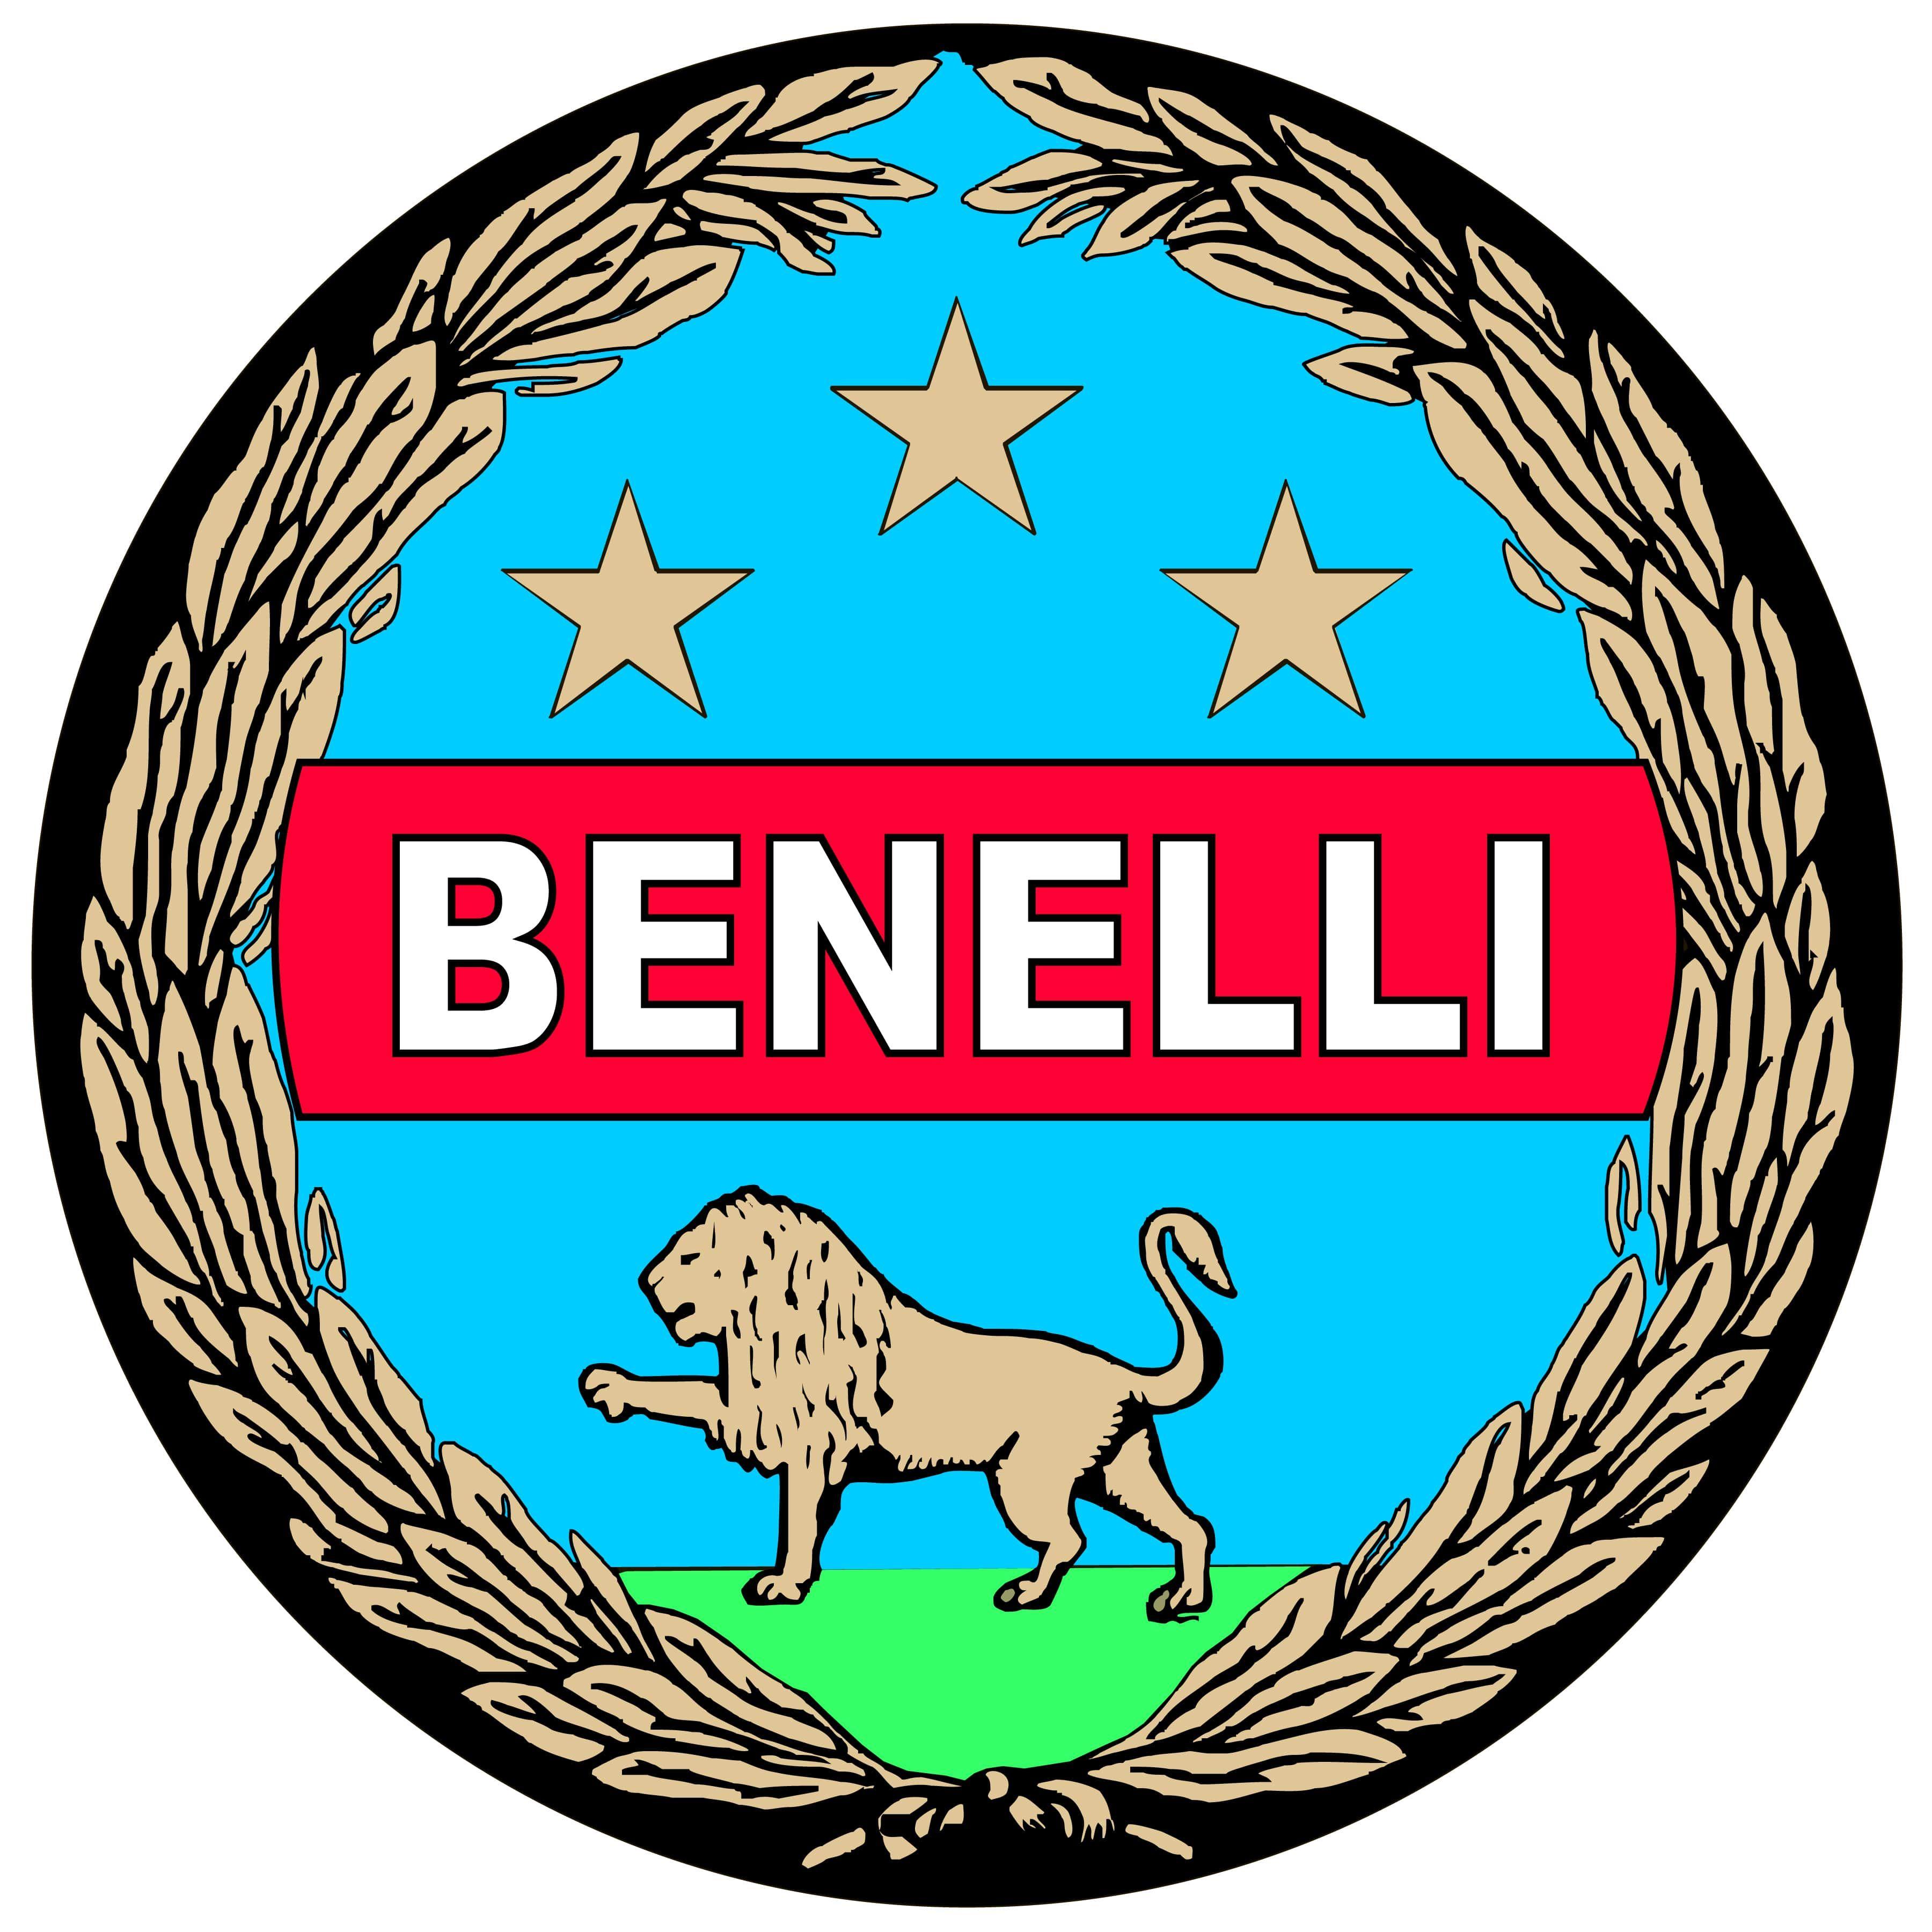 Benelli Logo - Benelli Motorcycle Logo | my stuff | Pinterest | Motorcycle logo ...